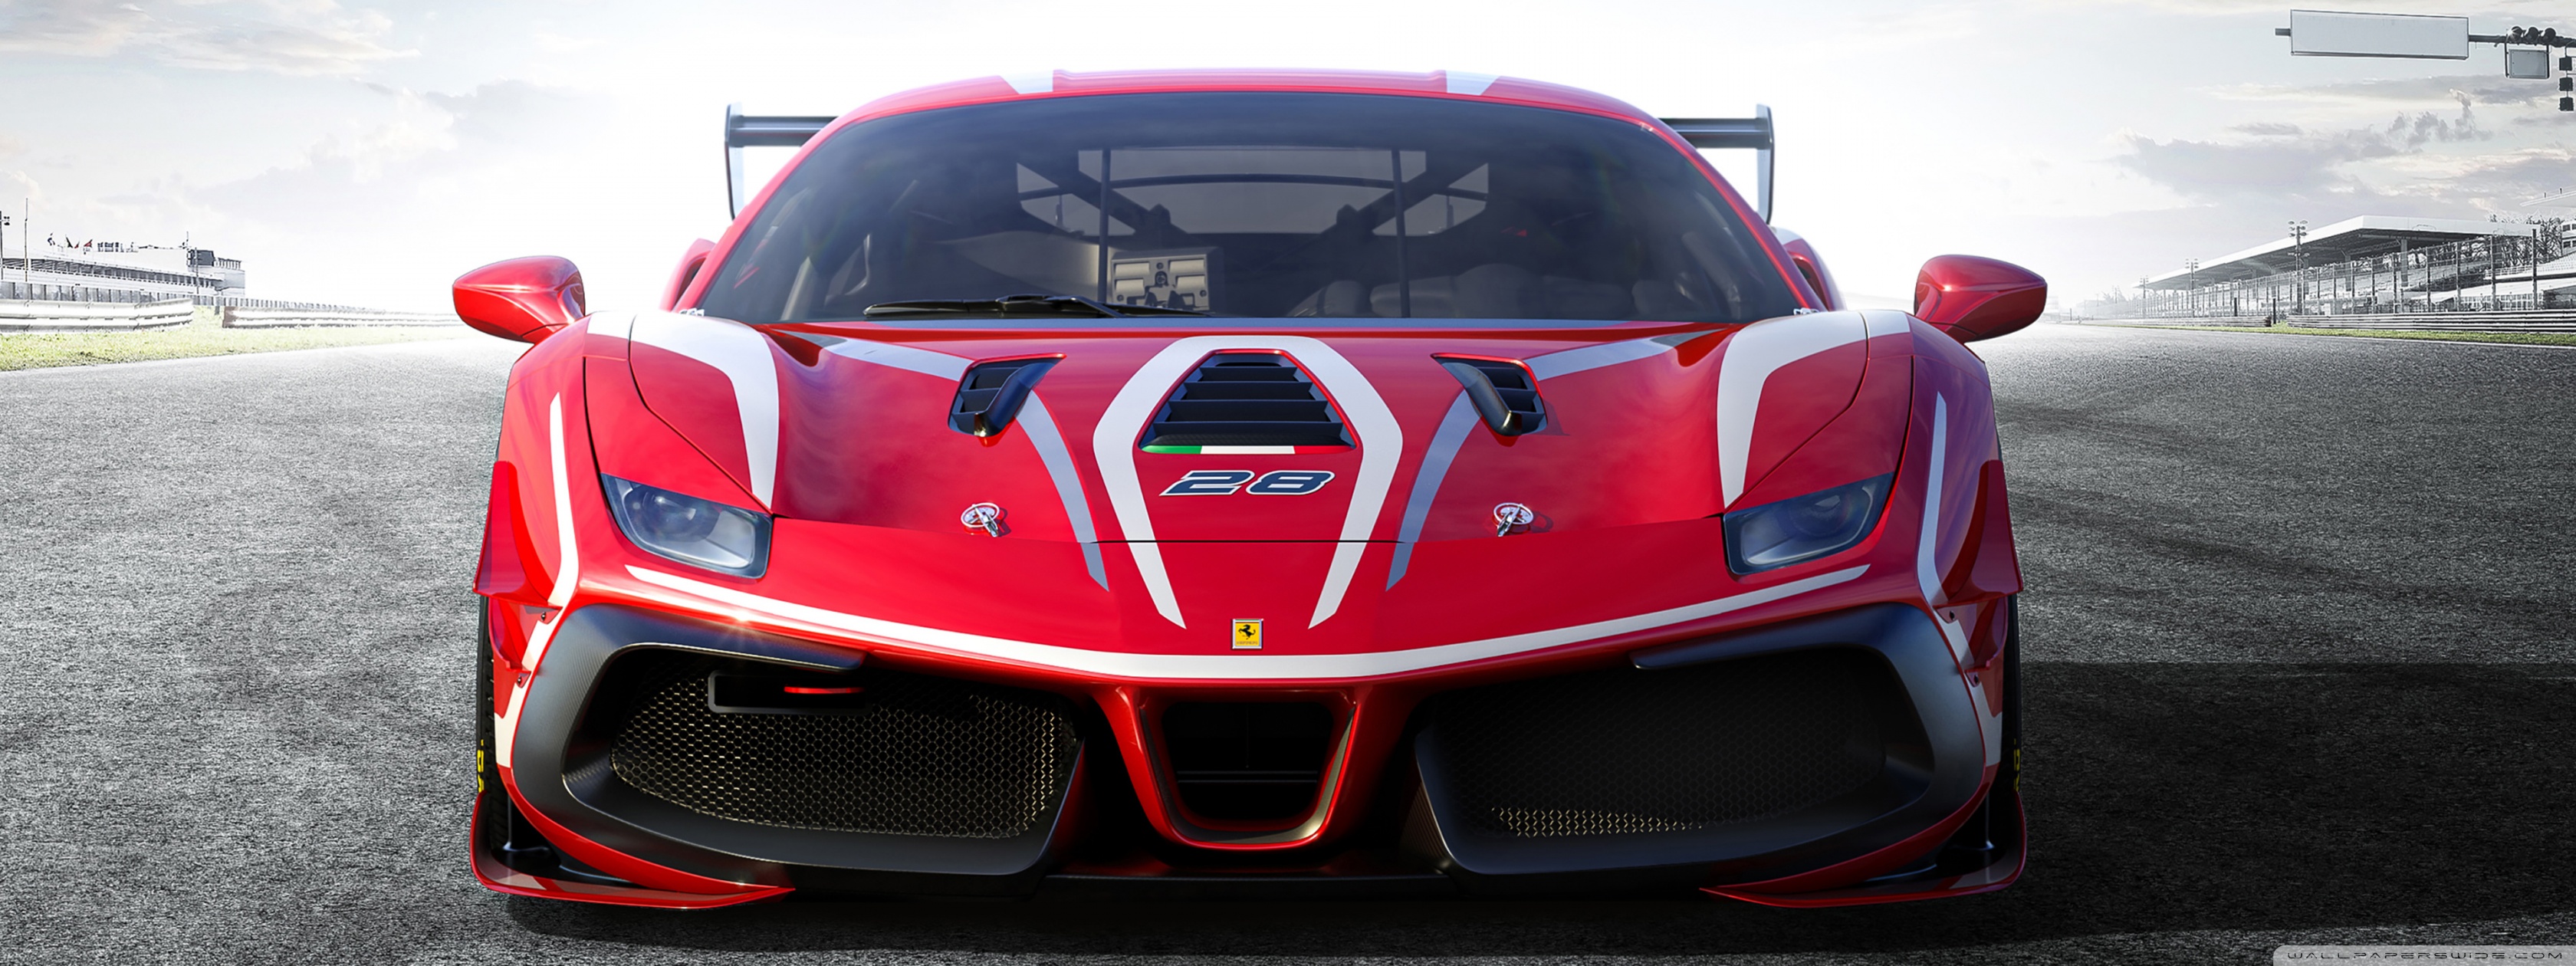 Ferrari Challenge Evo Race Car Ultra HD Desktop